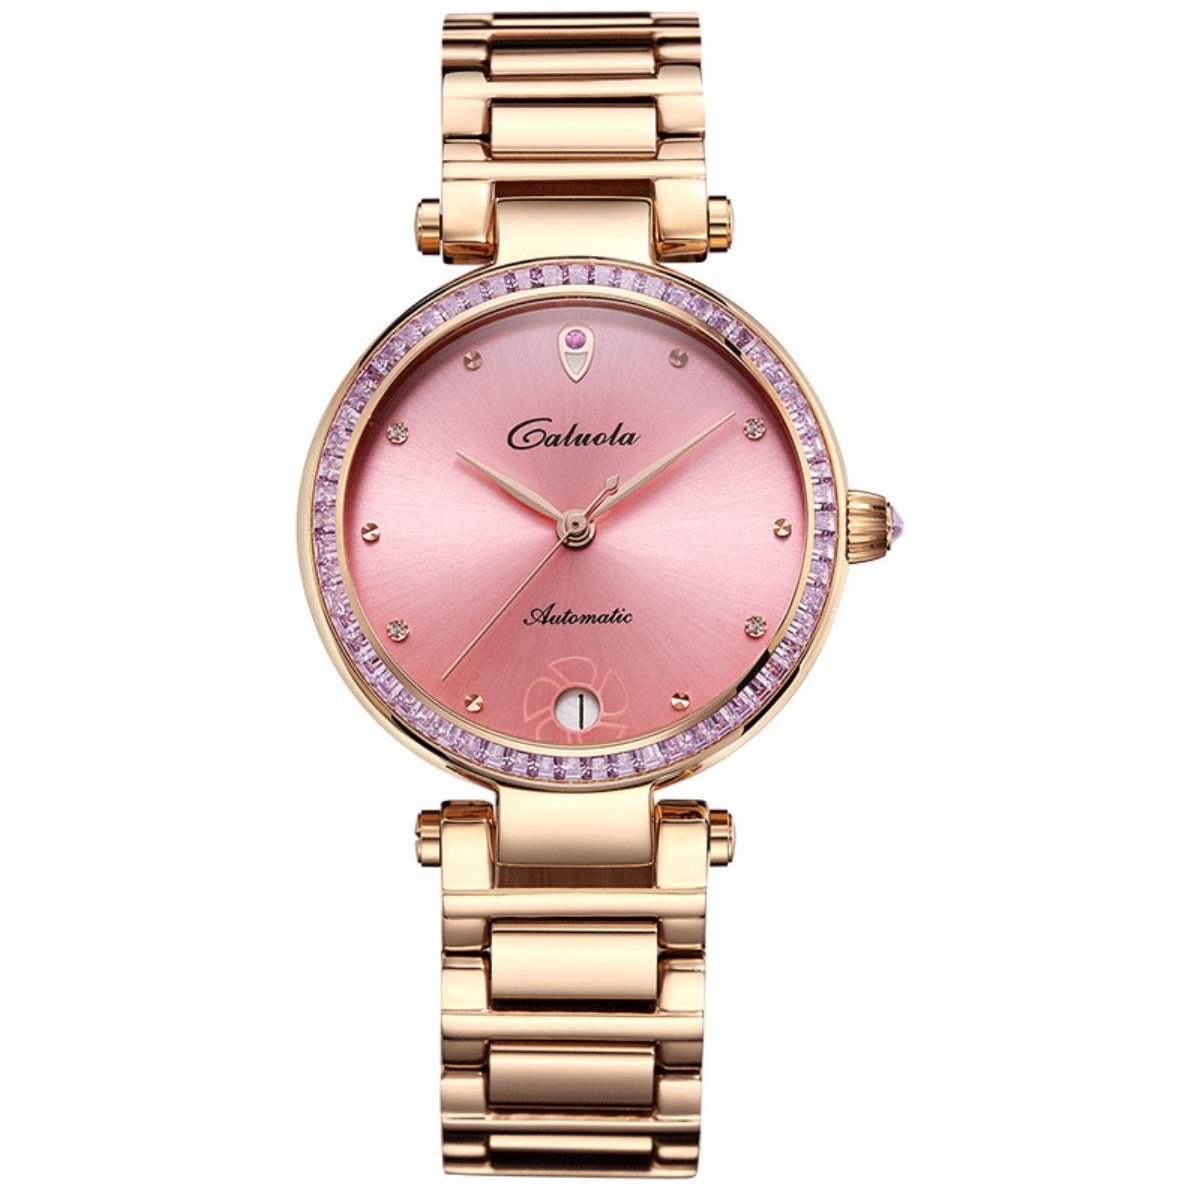 Caluola Automatic Watch Fashion Diamond Dress Watch Women's Watch CA1221MLQJ